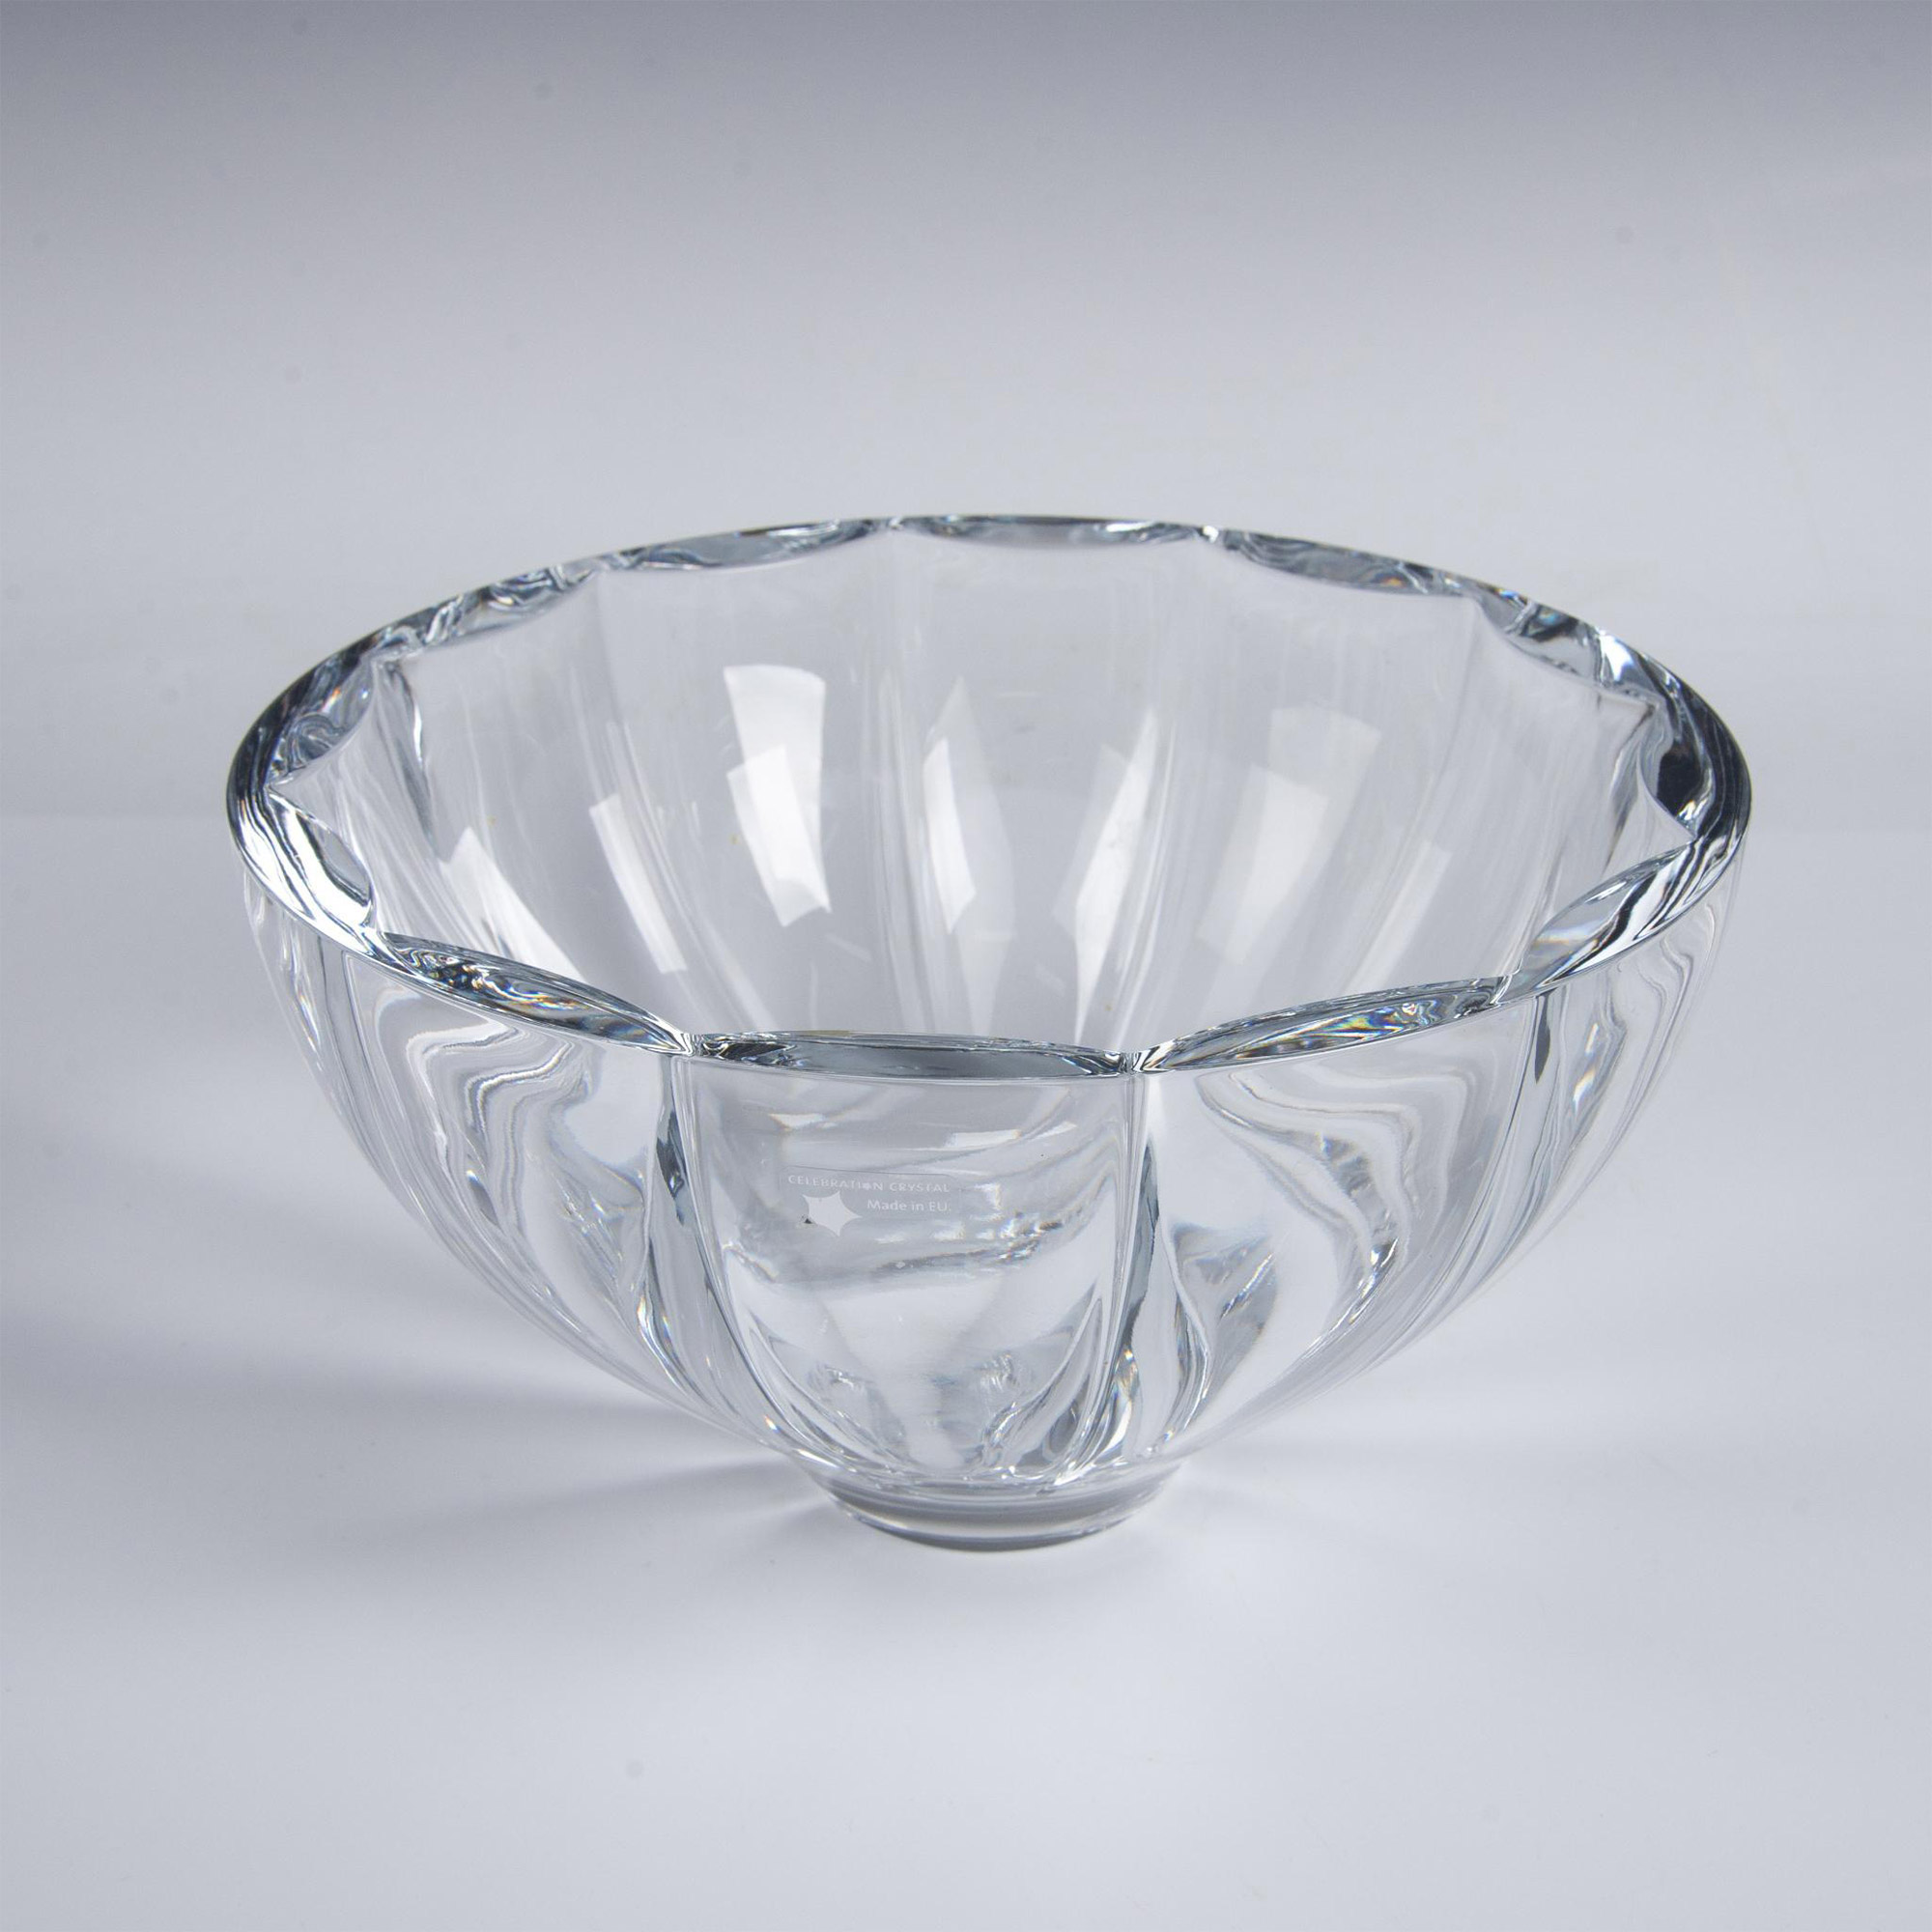 Celebration Crystal Centerpiece Bowl - Image 3 of 4